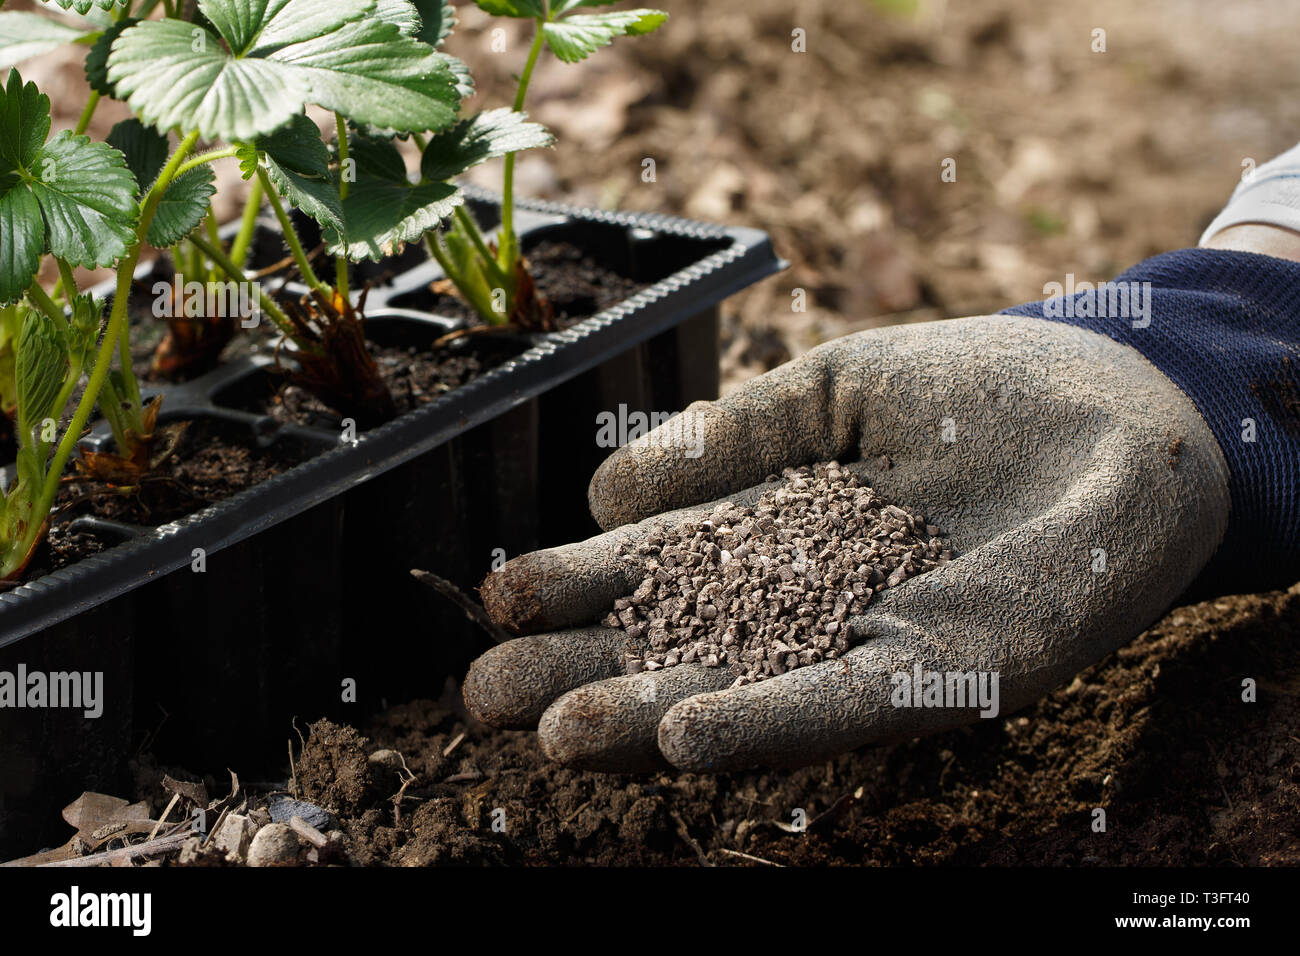 Gardener blending organic fertiliser humic granules with soil, enriching soil for plants to grow optimally. Organic gardening, healthy food, nutrients Stock Photo